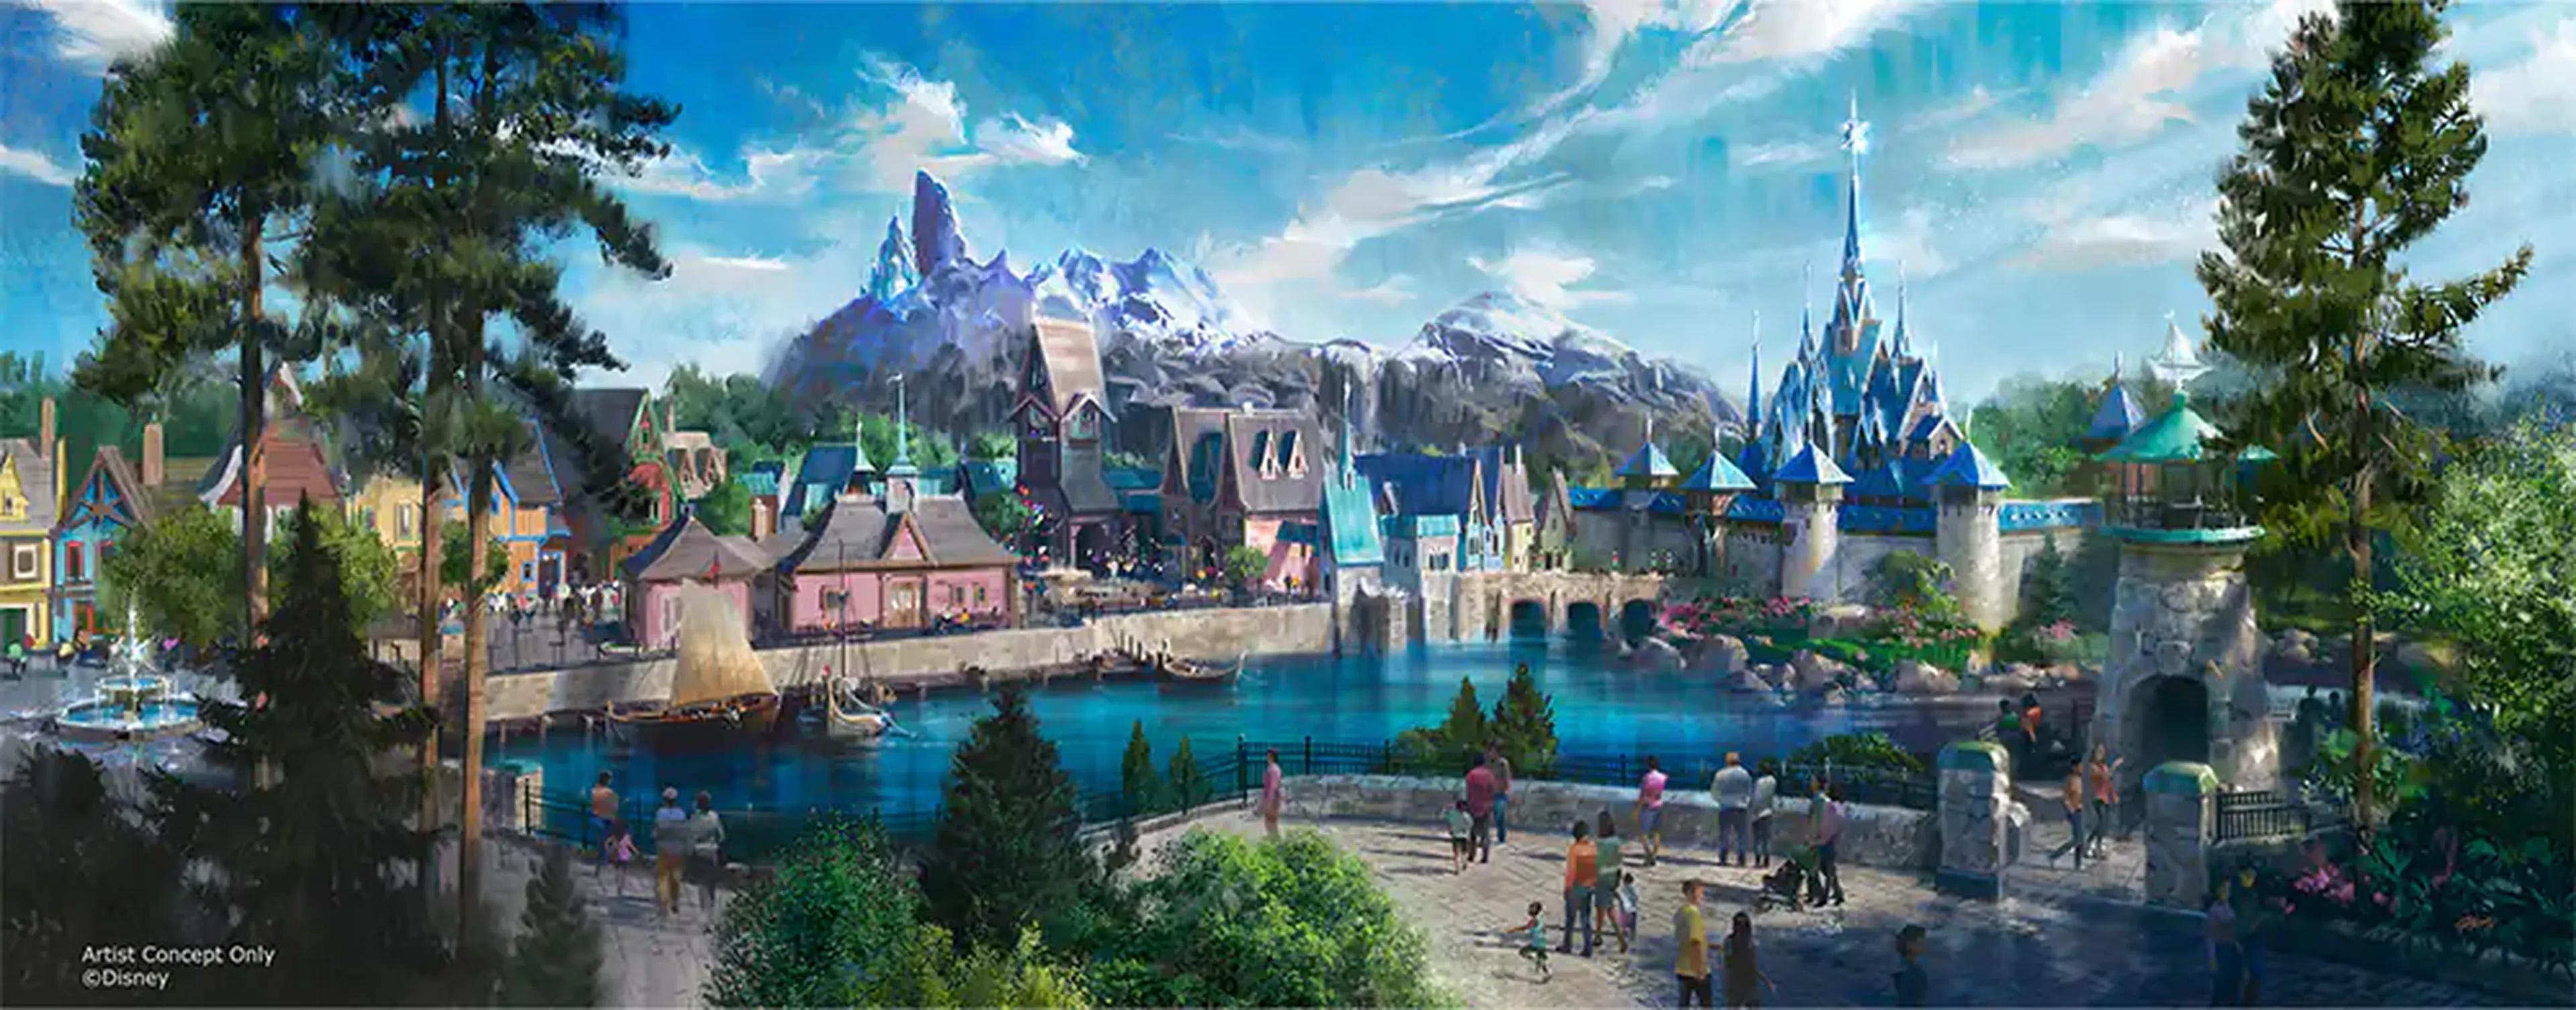 Walt Disney Studios Park Disneyland Paris